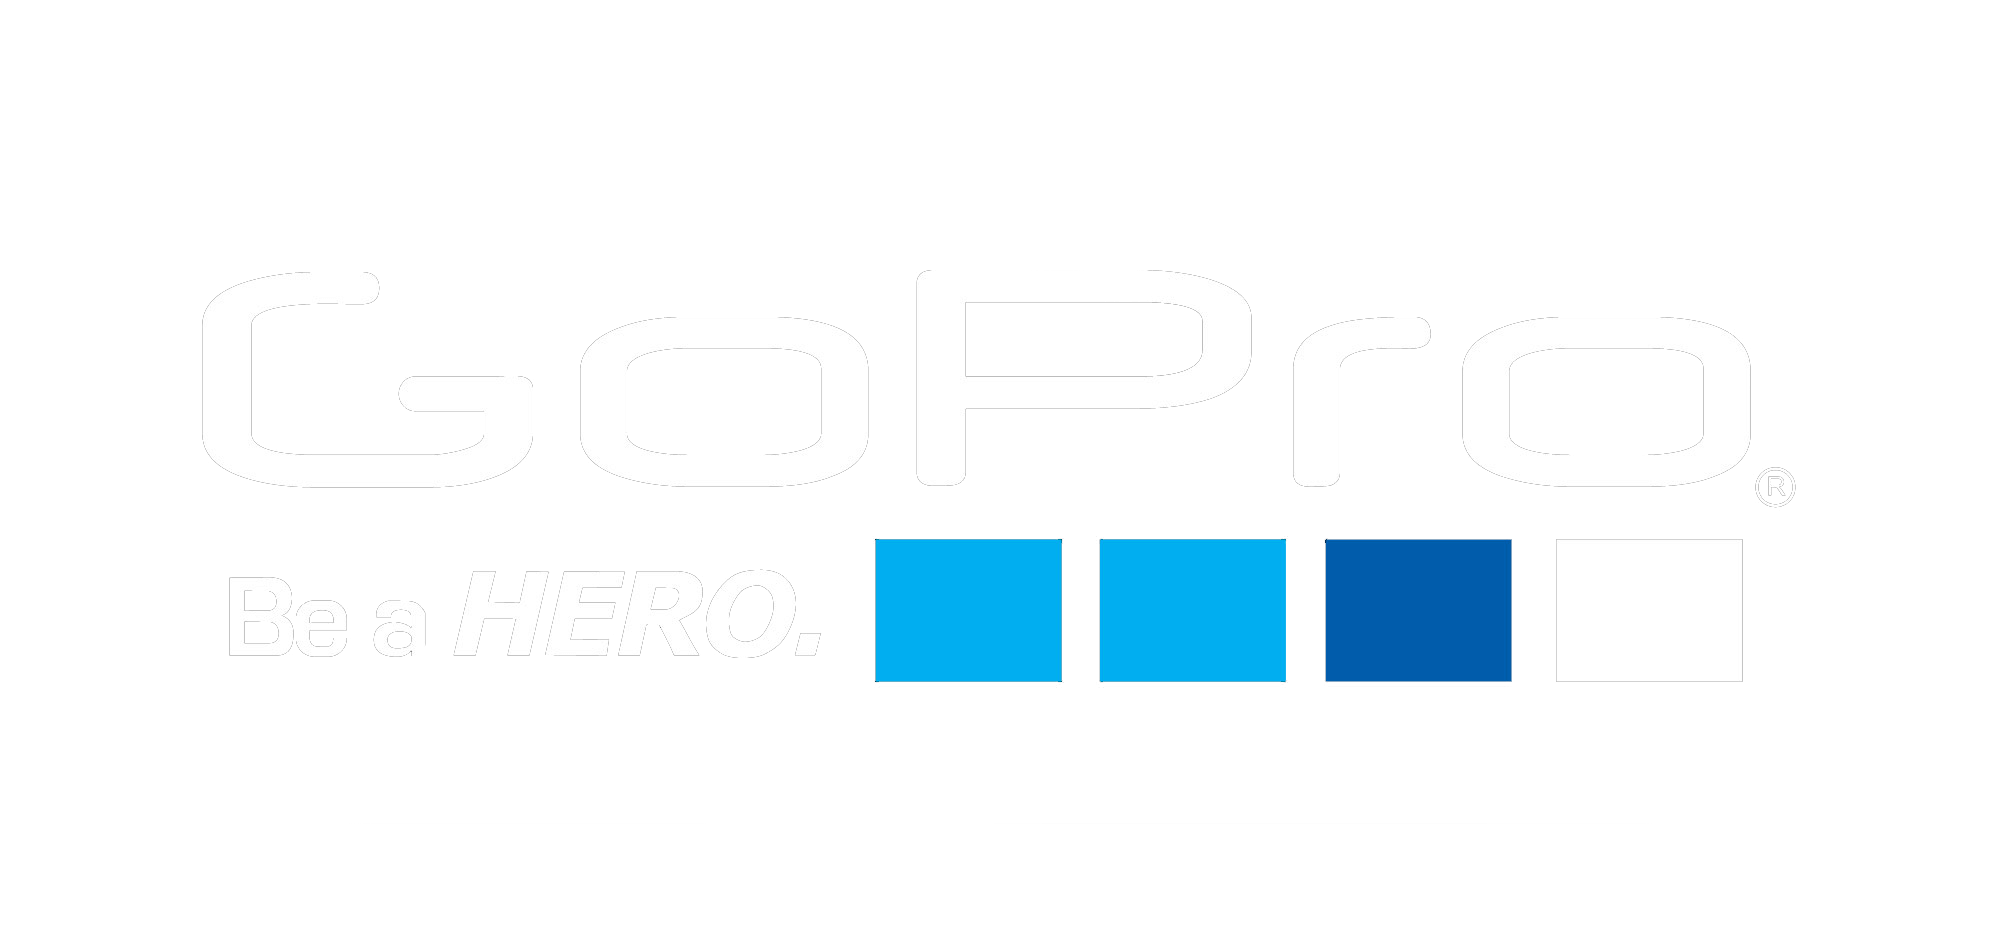 Gopro logo PNG images hd